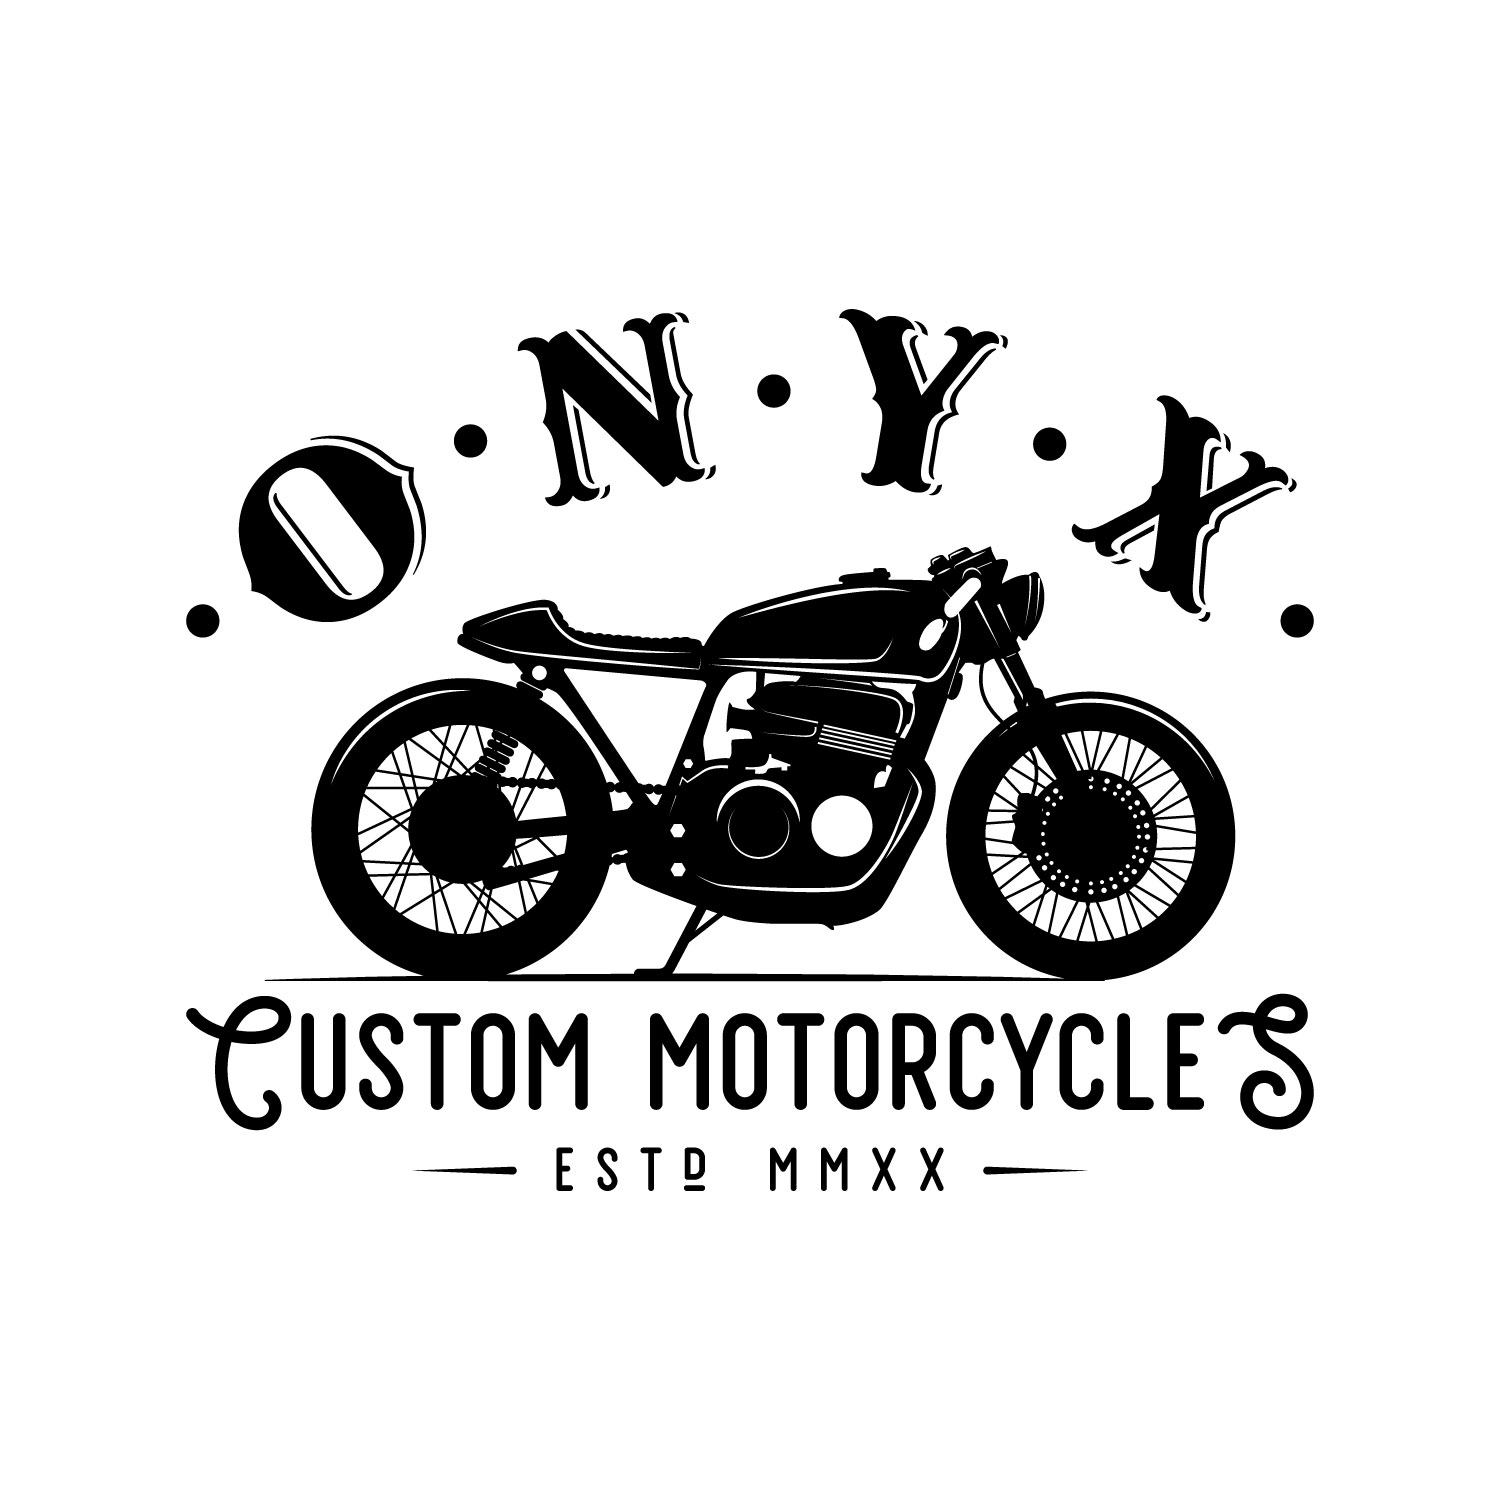 ONYX CUSTOM MOTORCYCLES